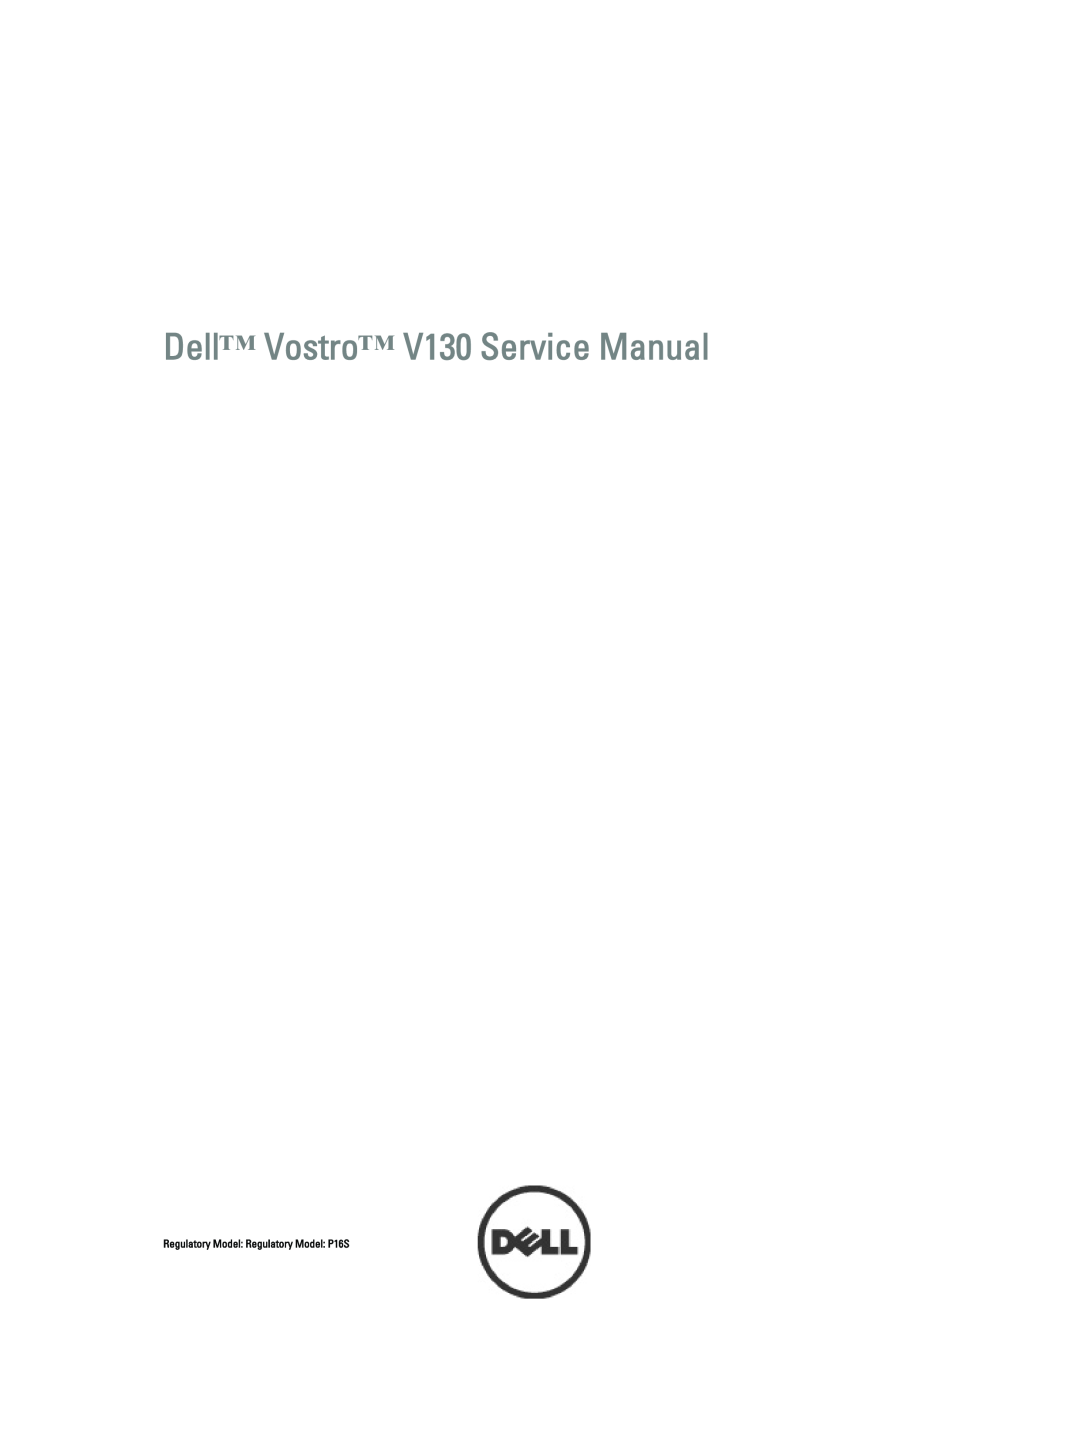 Dell service manual Dell Vostro V130 Service Manual, Regulatory Model Regulatory Model P16S 